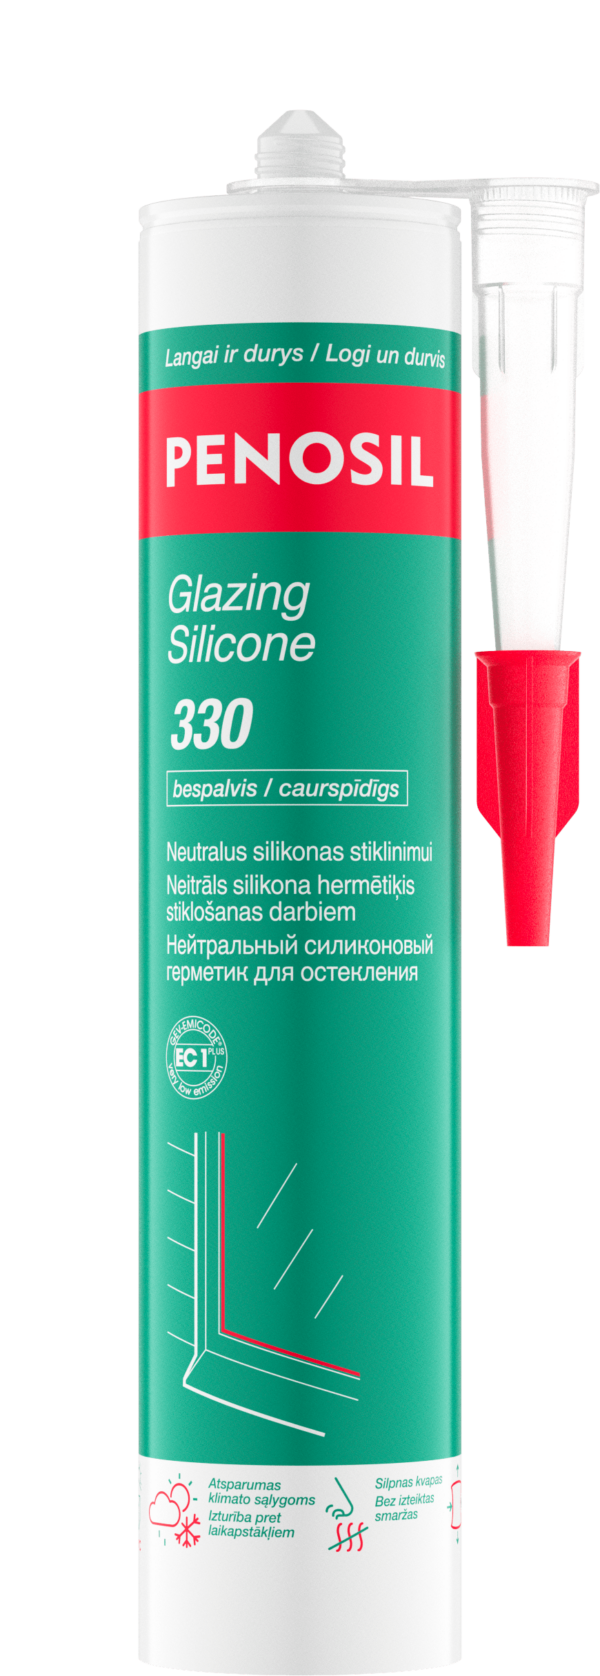 penosil Glazing silicone 330